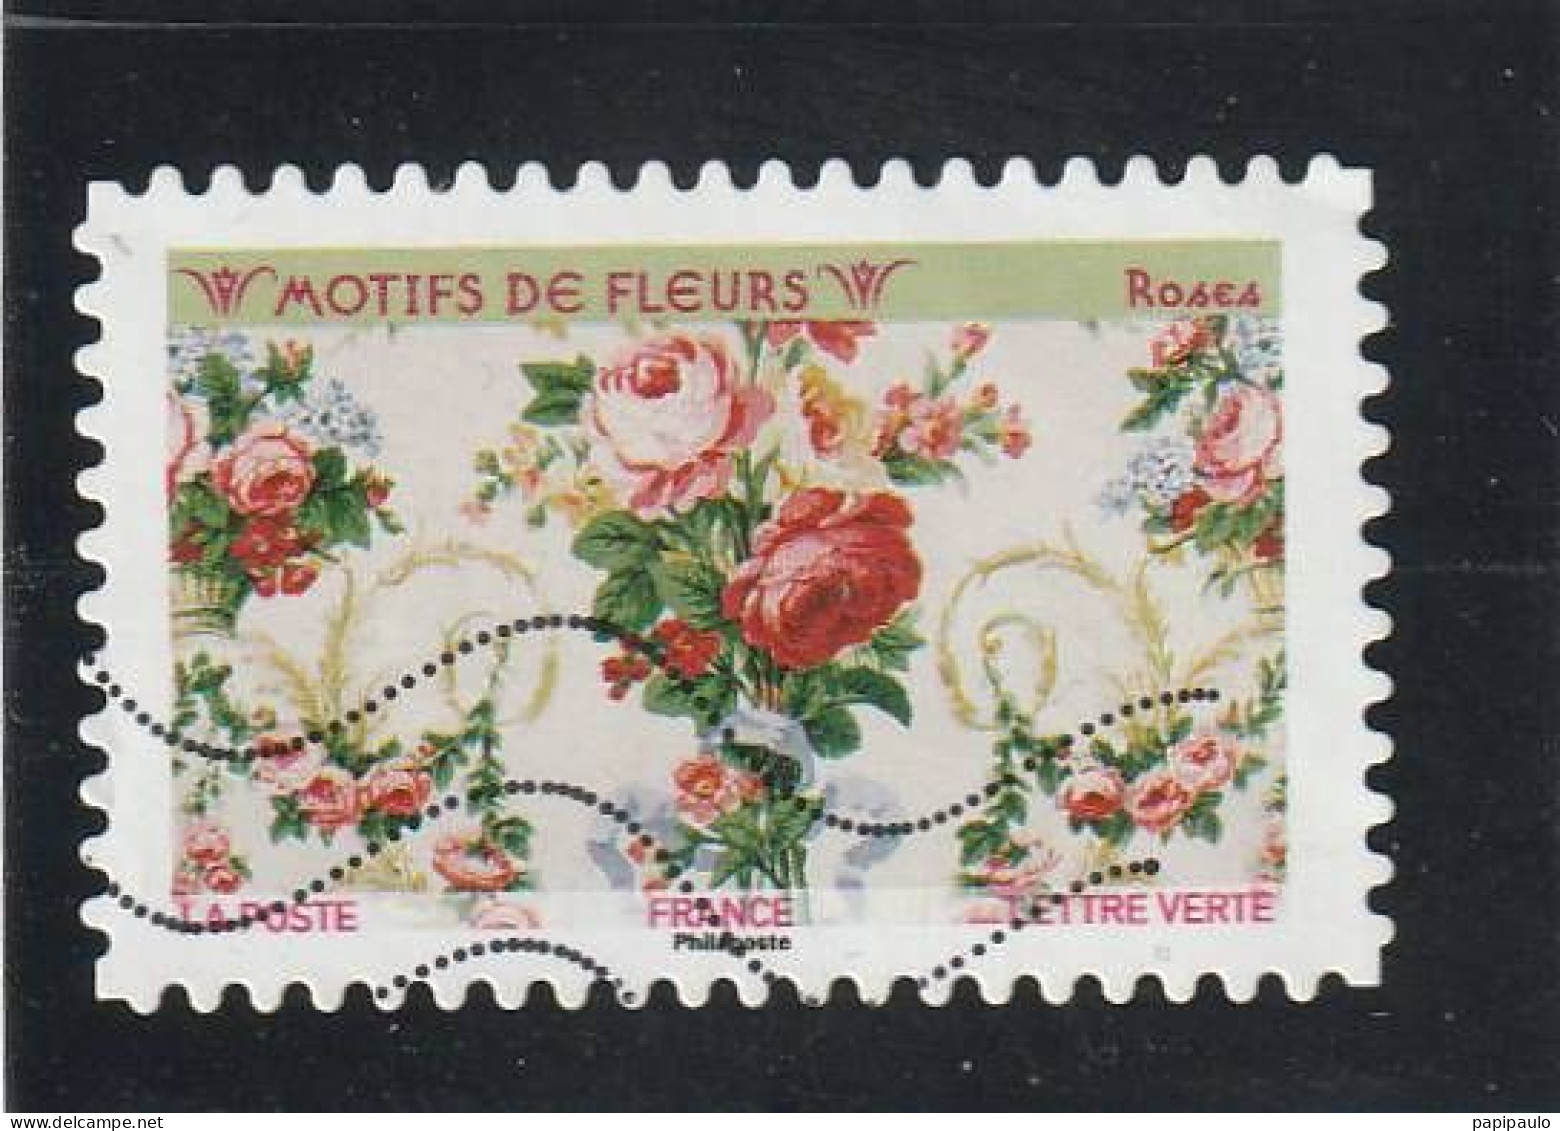 FRANCE 2021 Y&T 1991 Lettre Verte Flore - Used Stamps